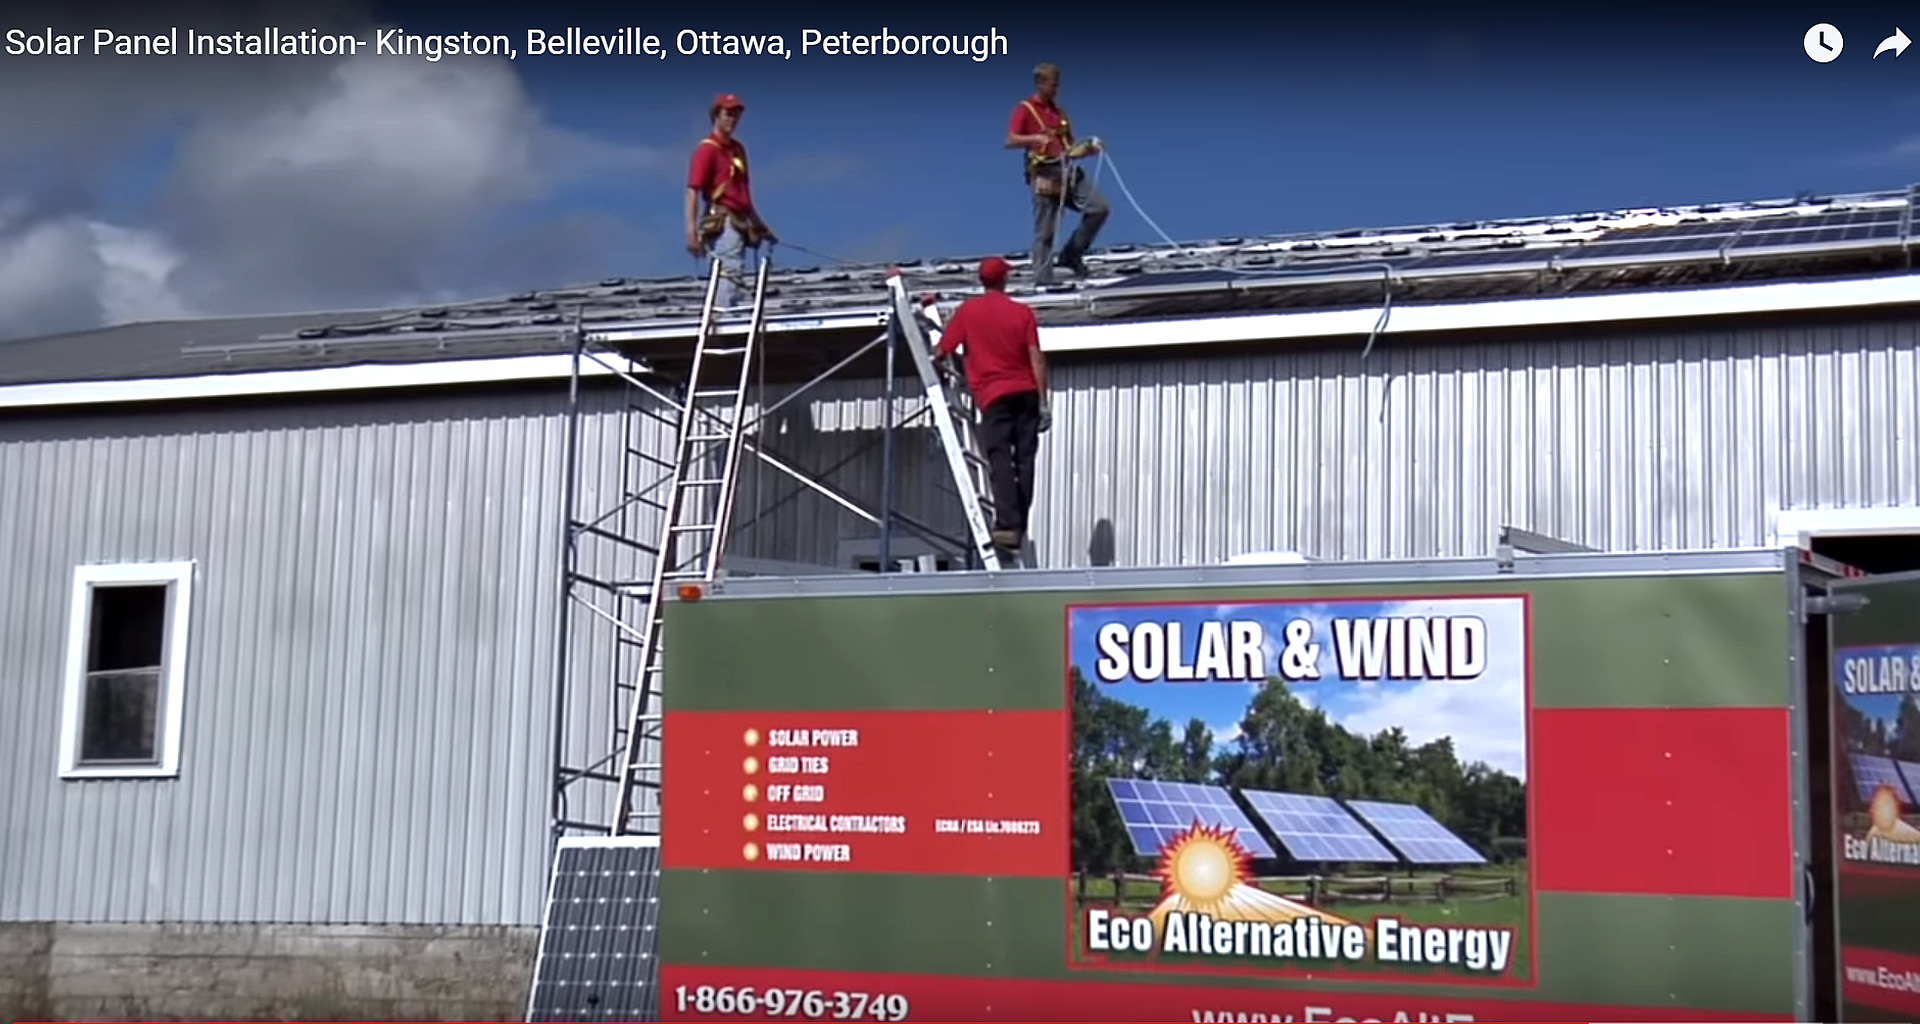 Eco Alternative Energy Sales and Testimonial Video by 45 Degrees Latitude